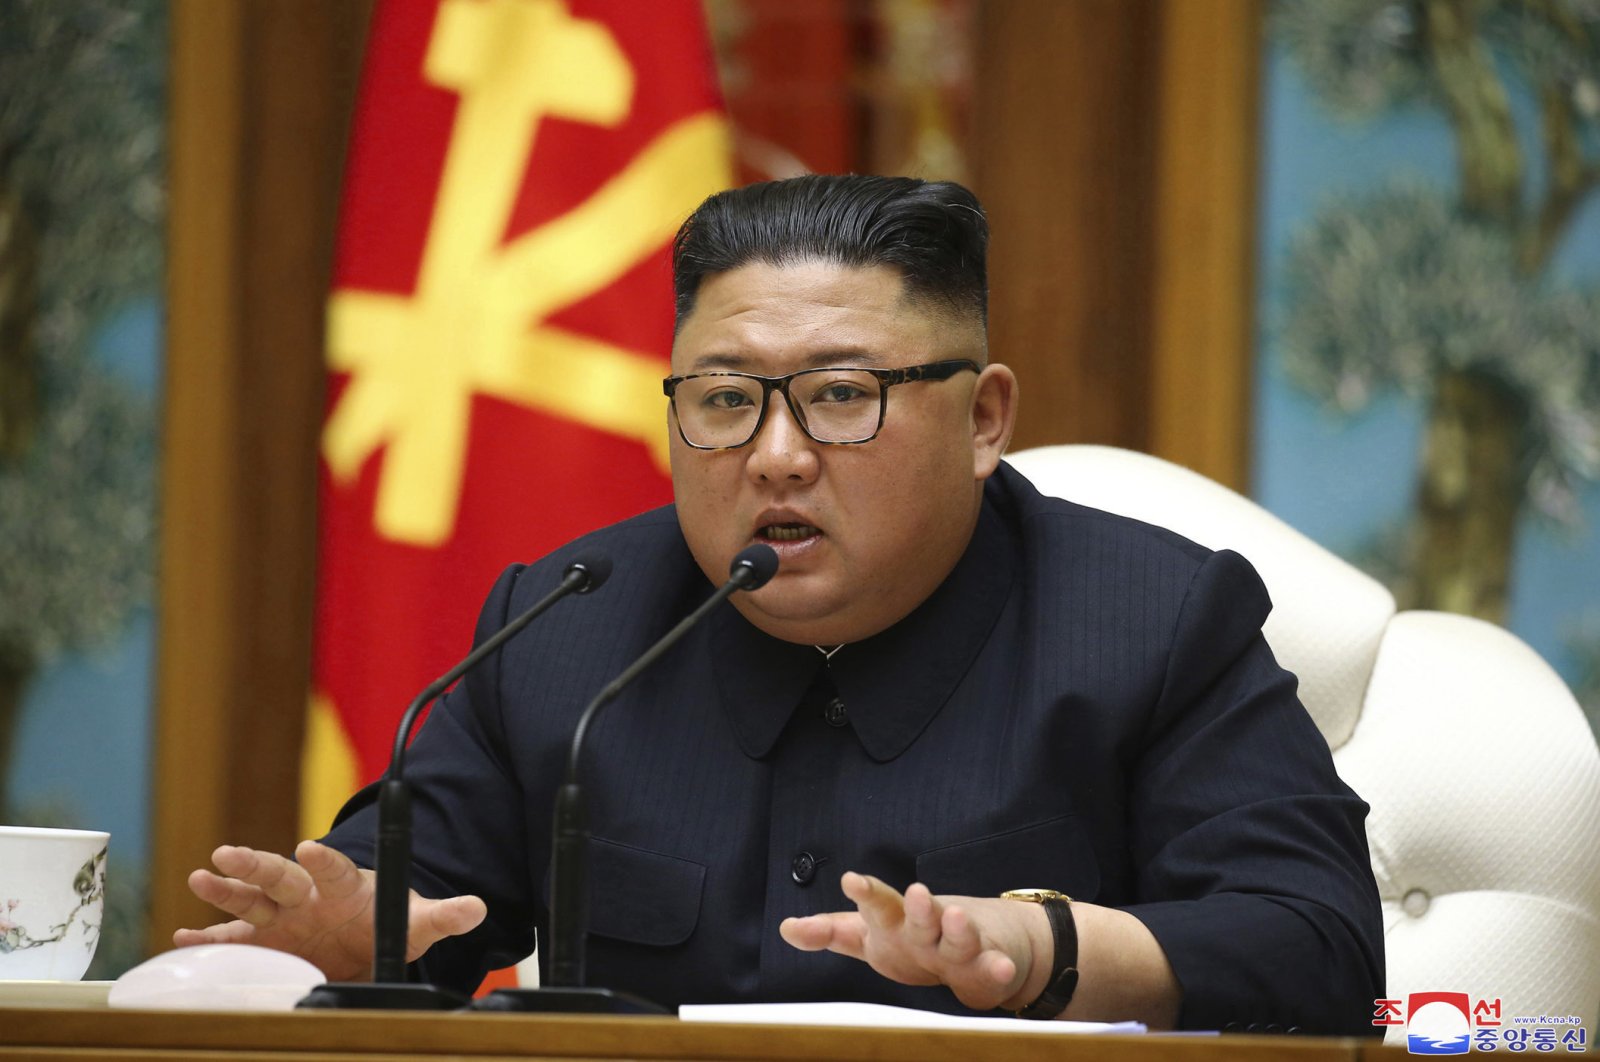 North Korean leader Kim Jong Un attends a politburo meeting of the ruling Workers' Party of Korea, Pyongyang, April 11, 2020. (AP Photo)